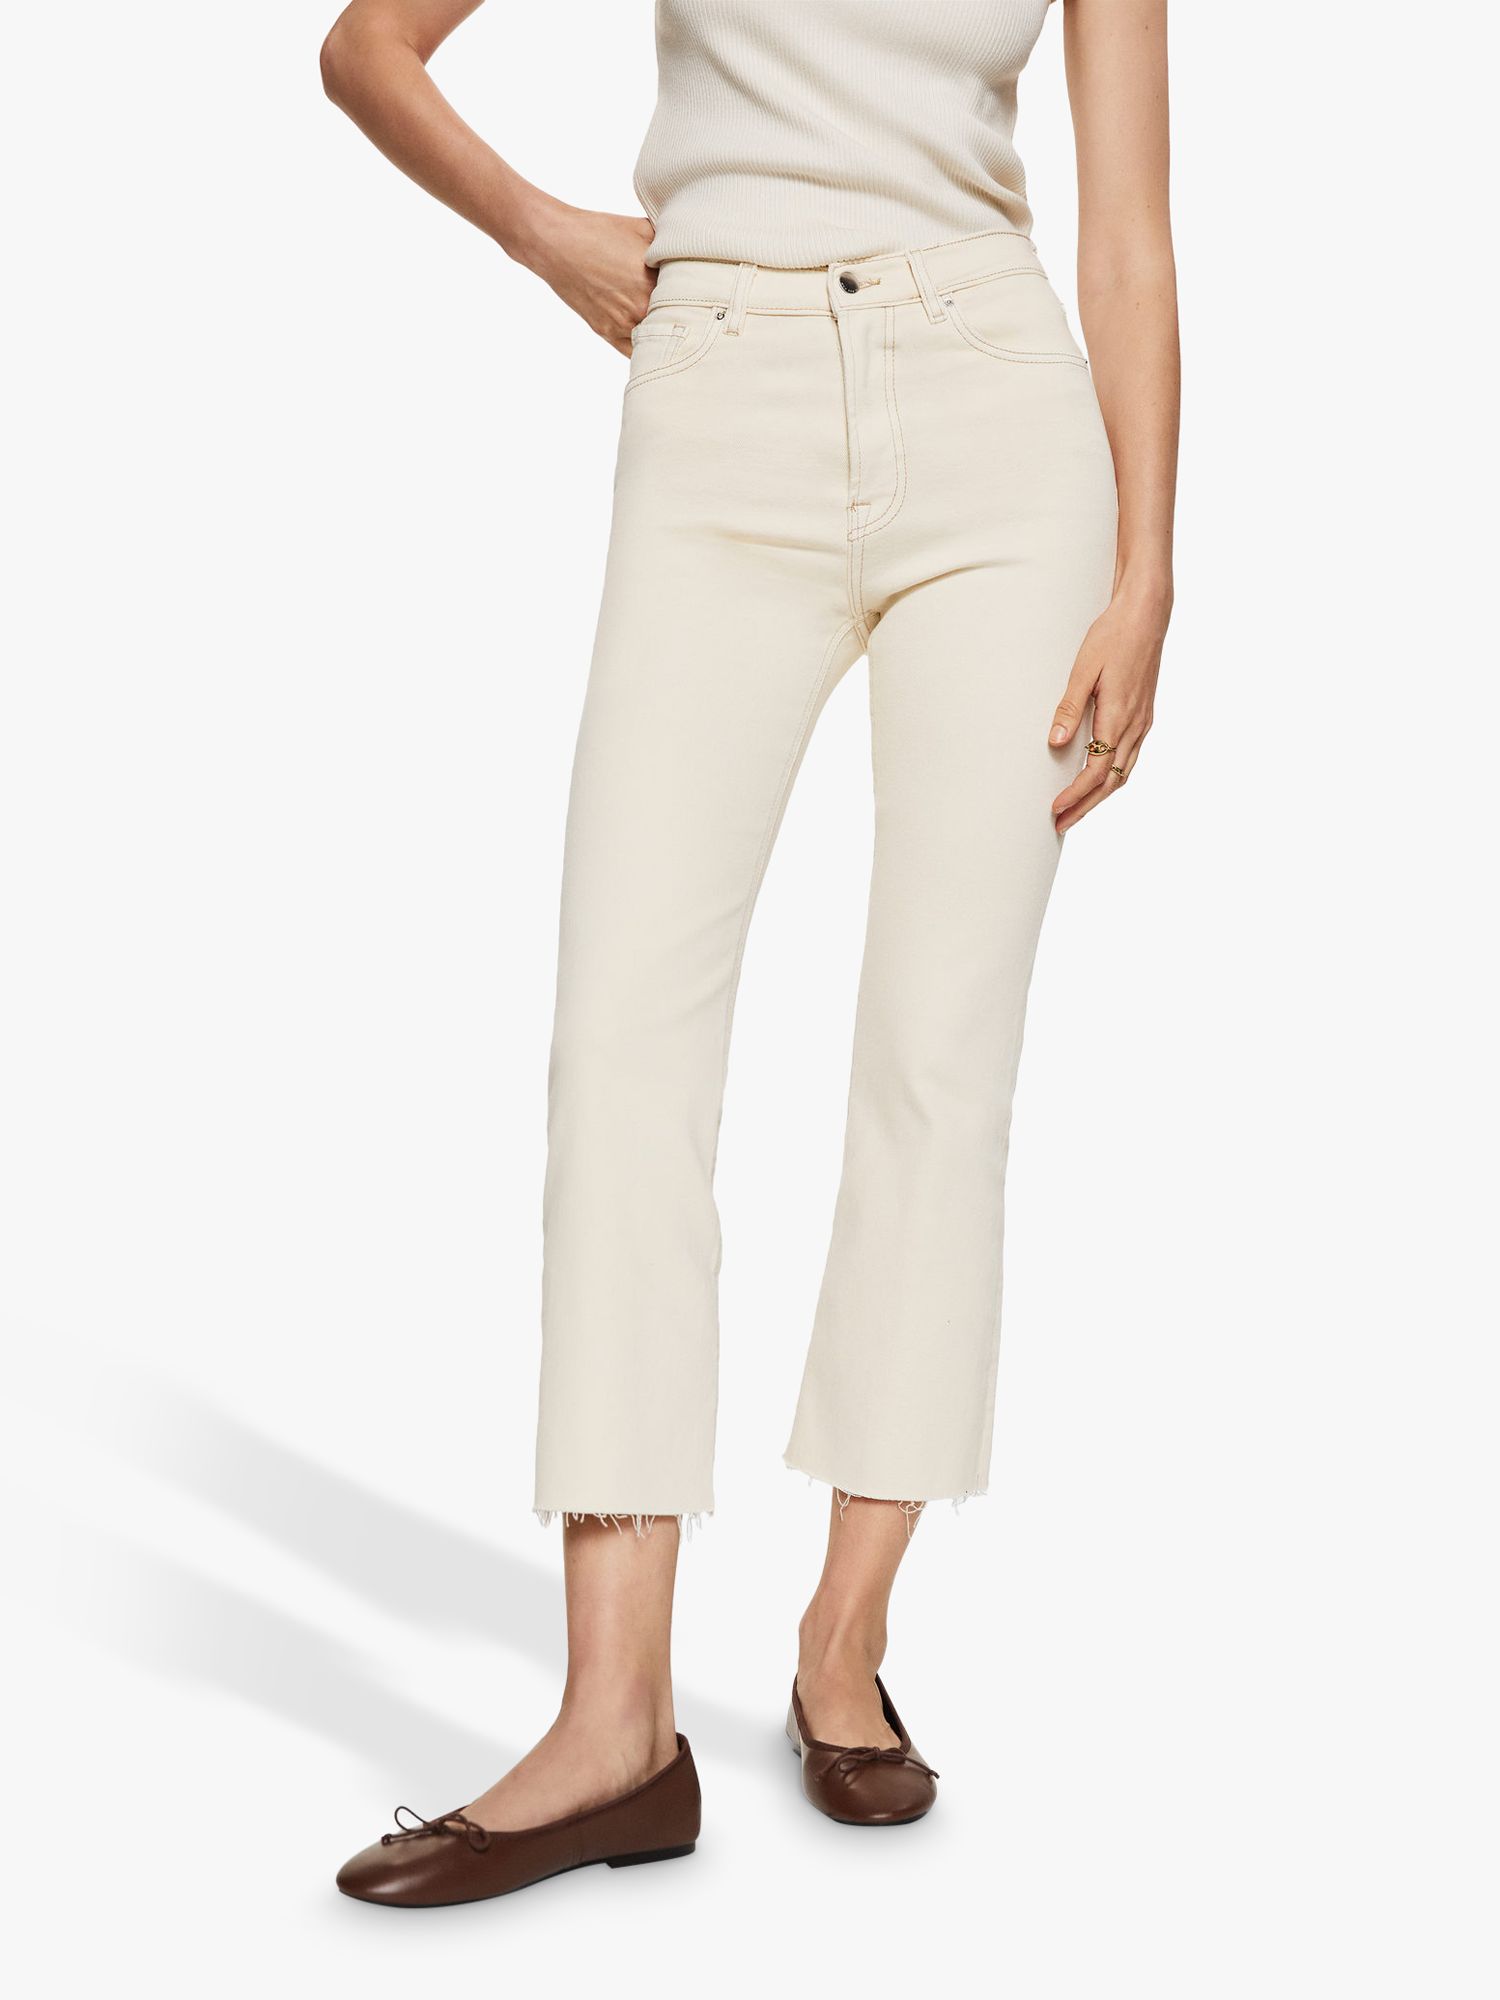 Mango Sienna Cropped Jeans, White at John Lewis & Partners